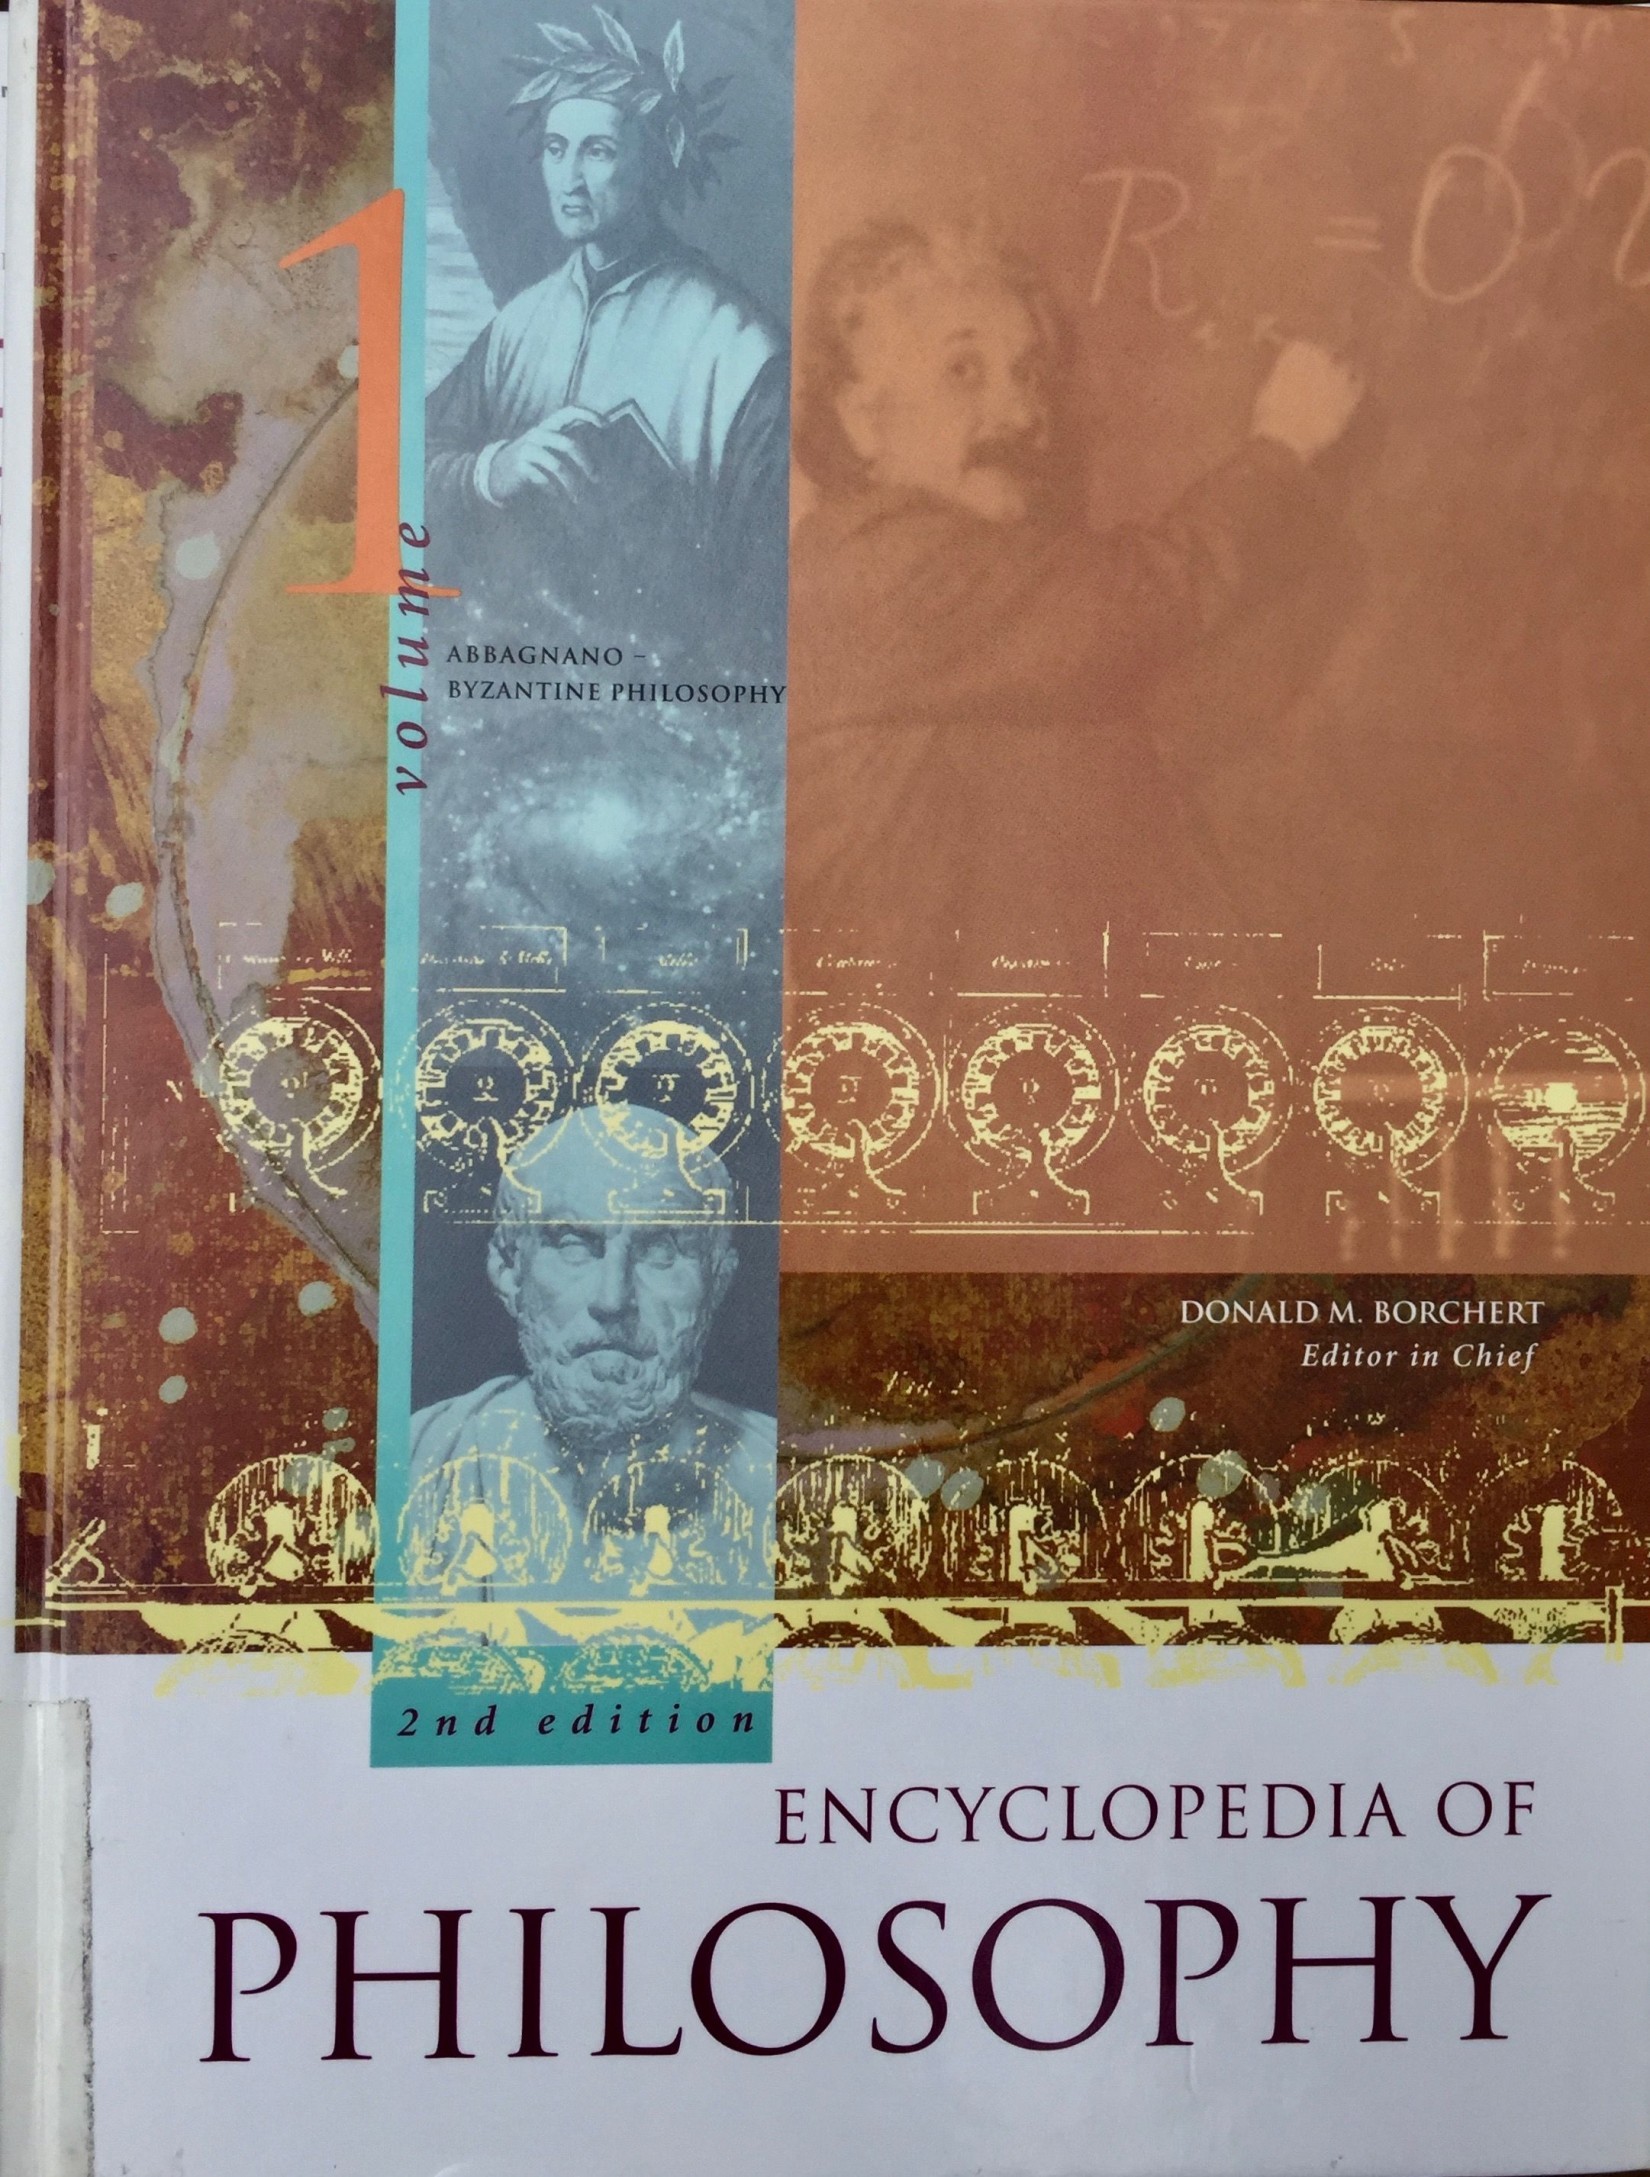 The Encyclopedia of Philosophy